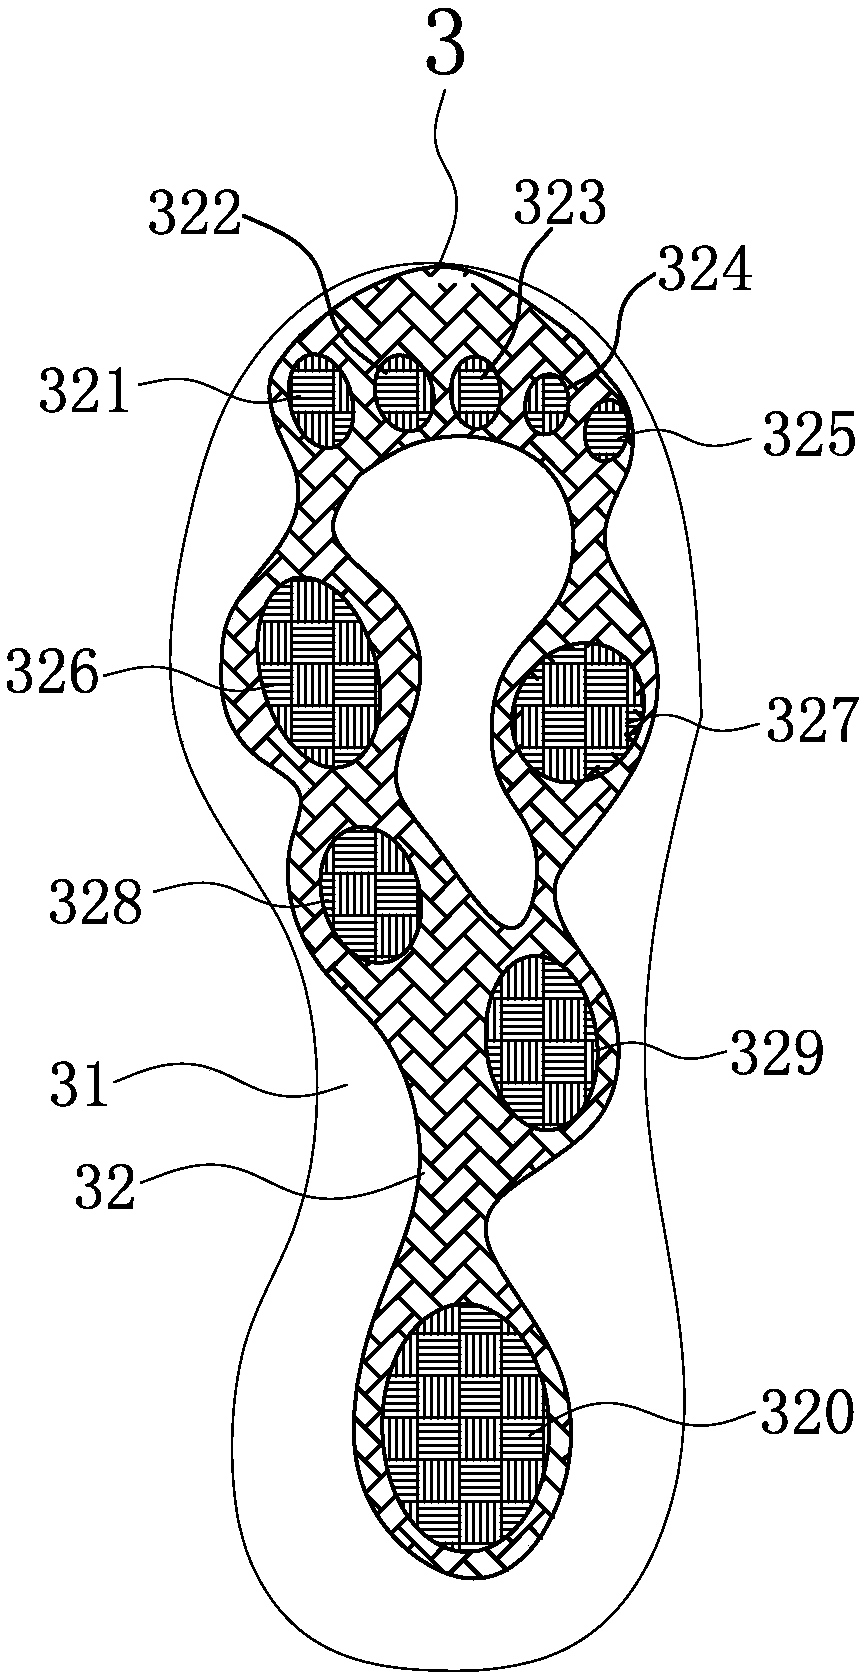 Pressure sensing-based intelligent sports shoe